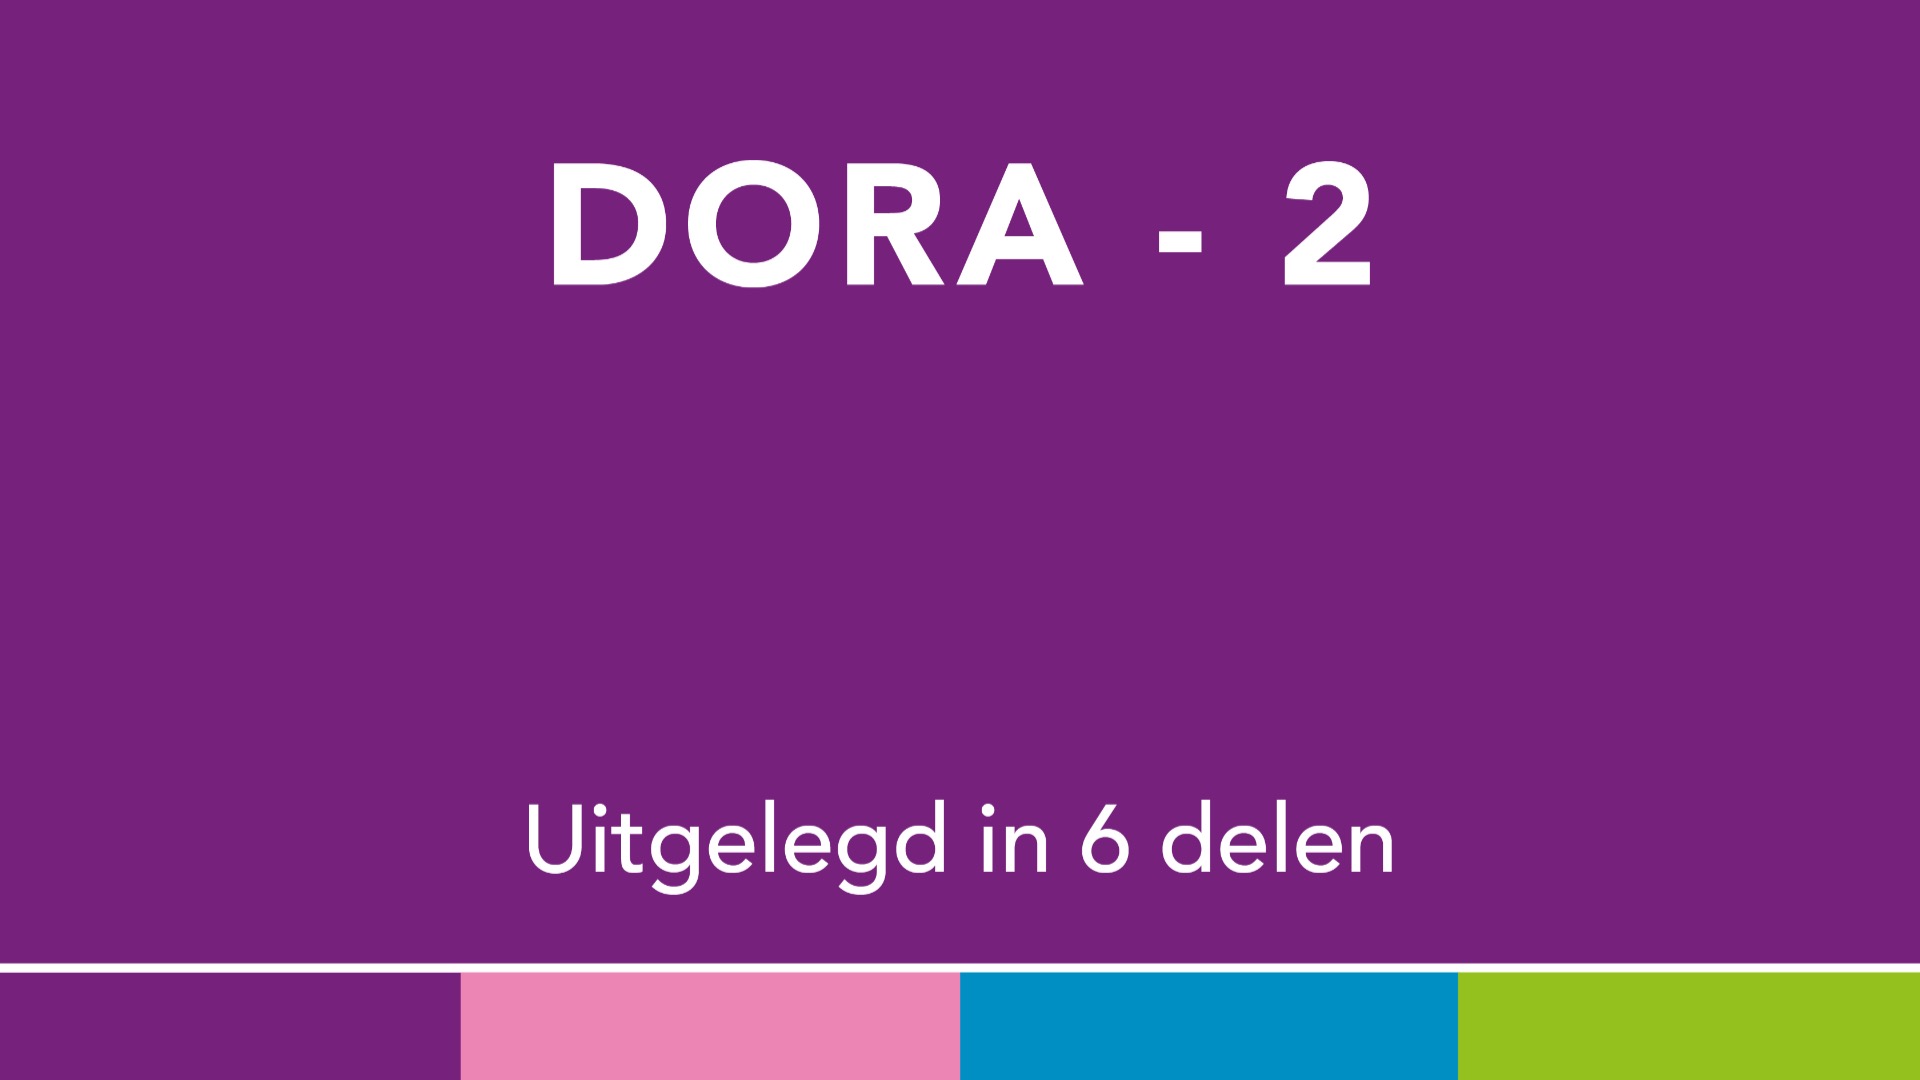 DORA - 2